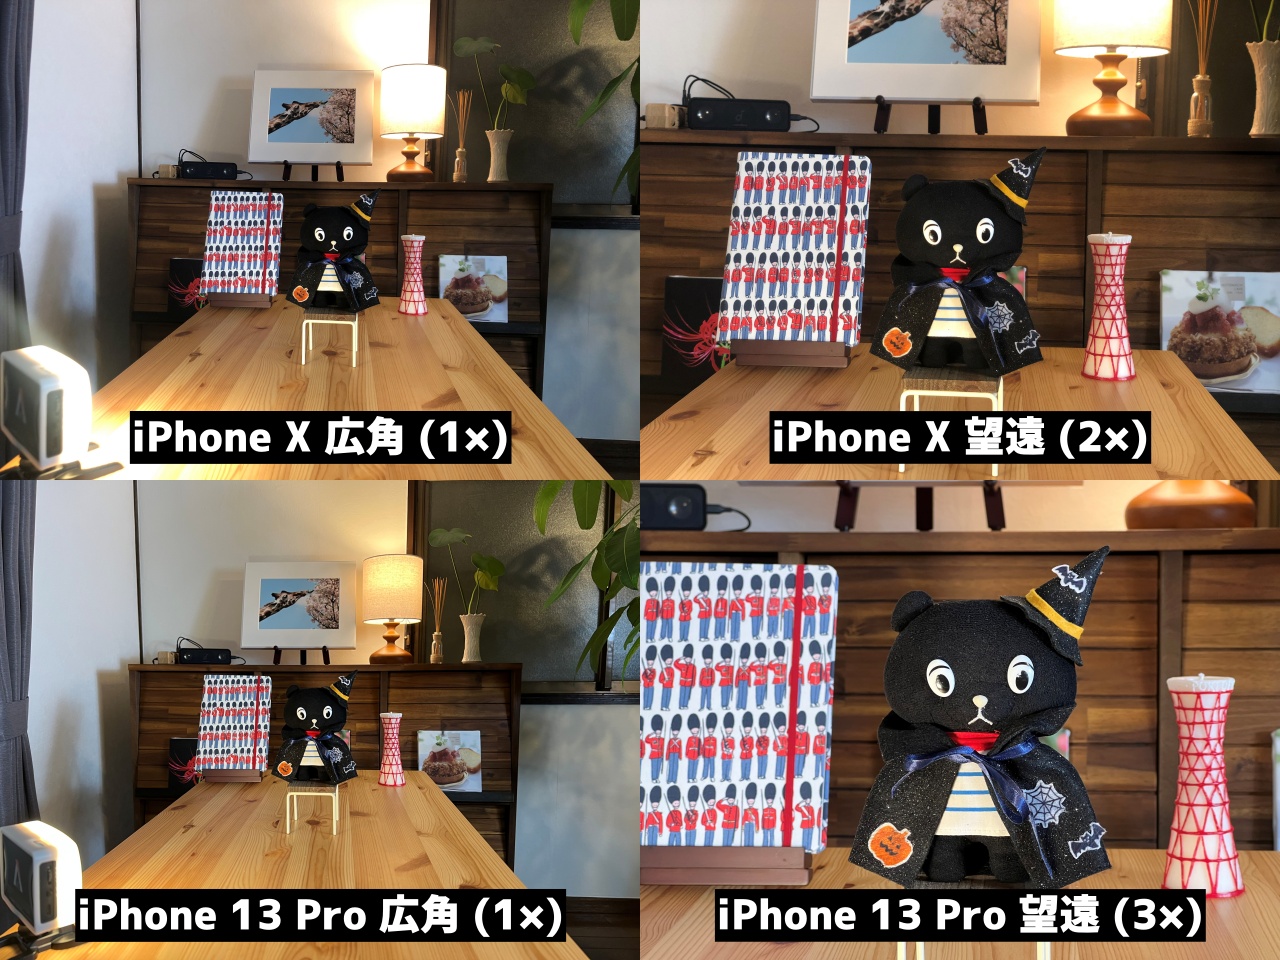 iPhoneのカメラの広角と望遠の比較 iPhone XおよびiPhone 13 Pro